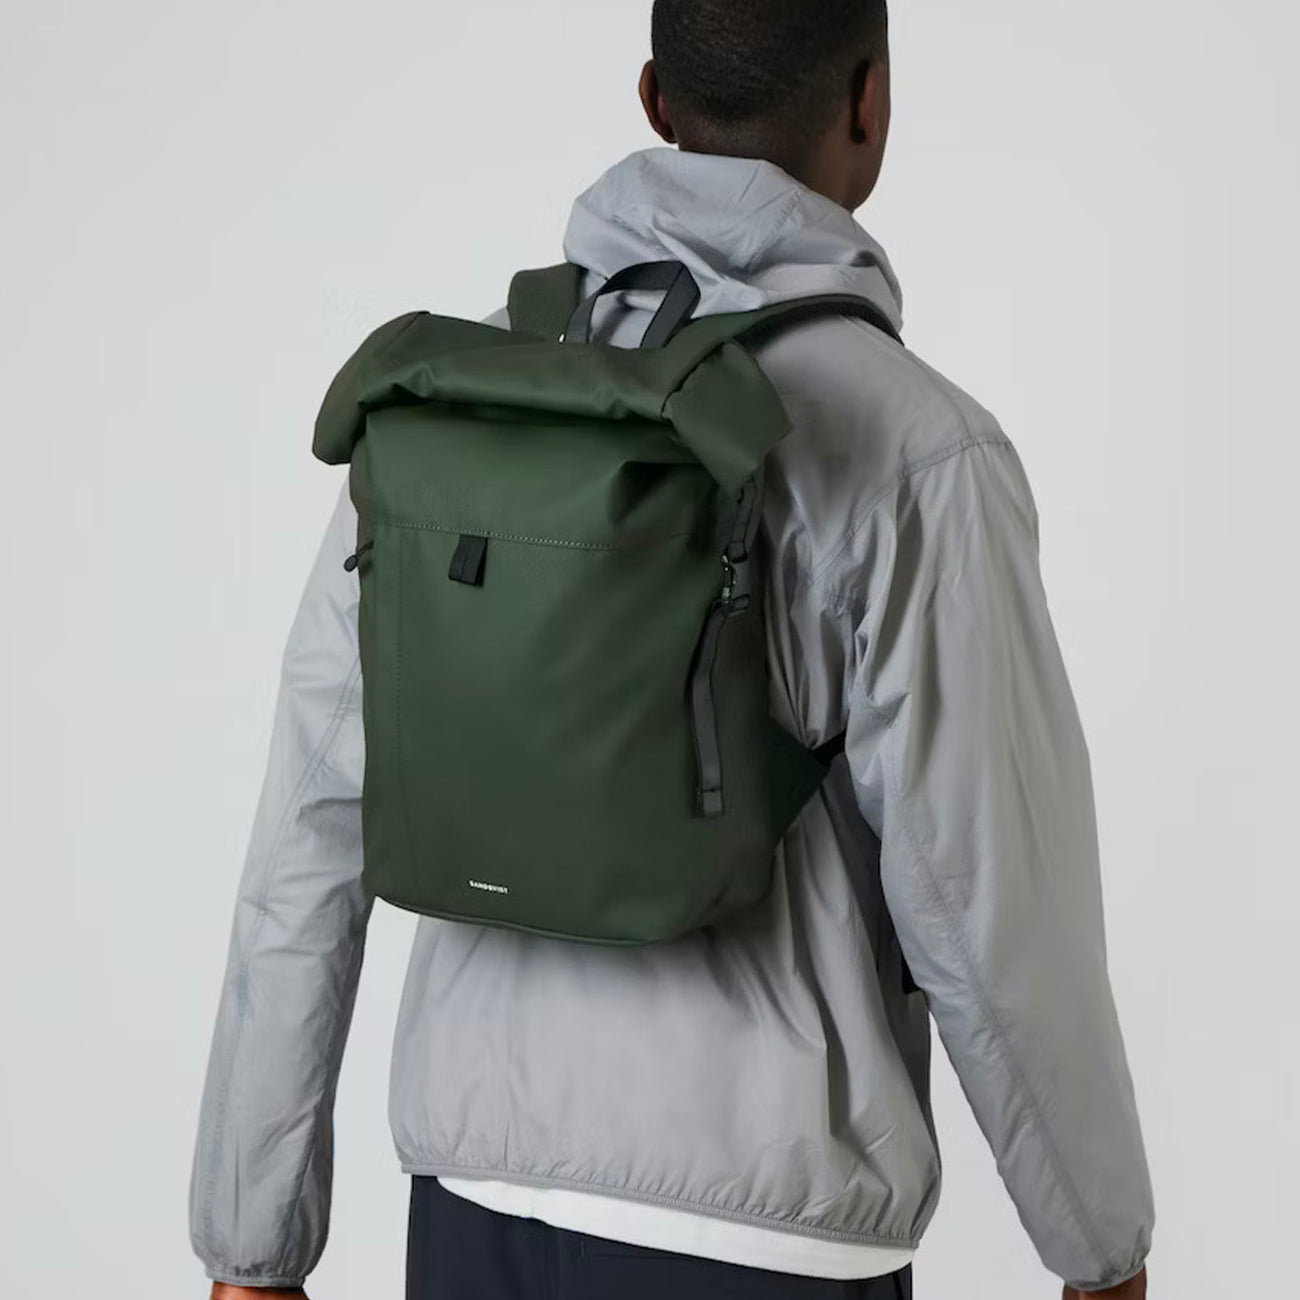 homme portant sac à dos roll top waterproof vert